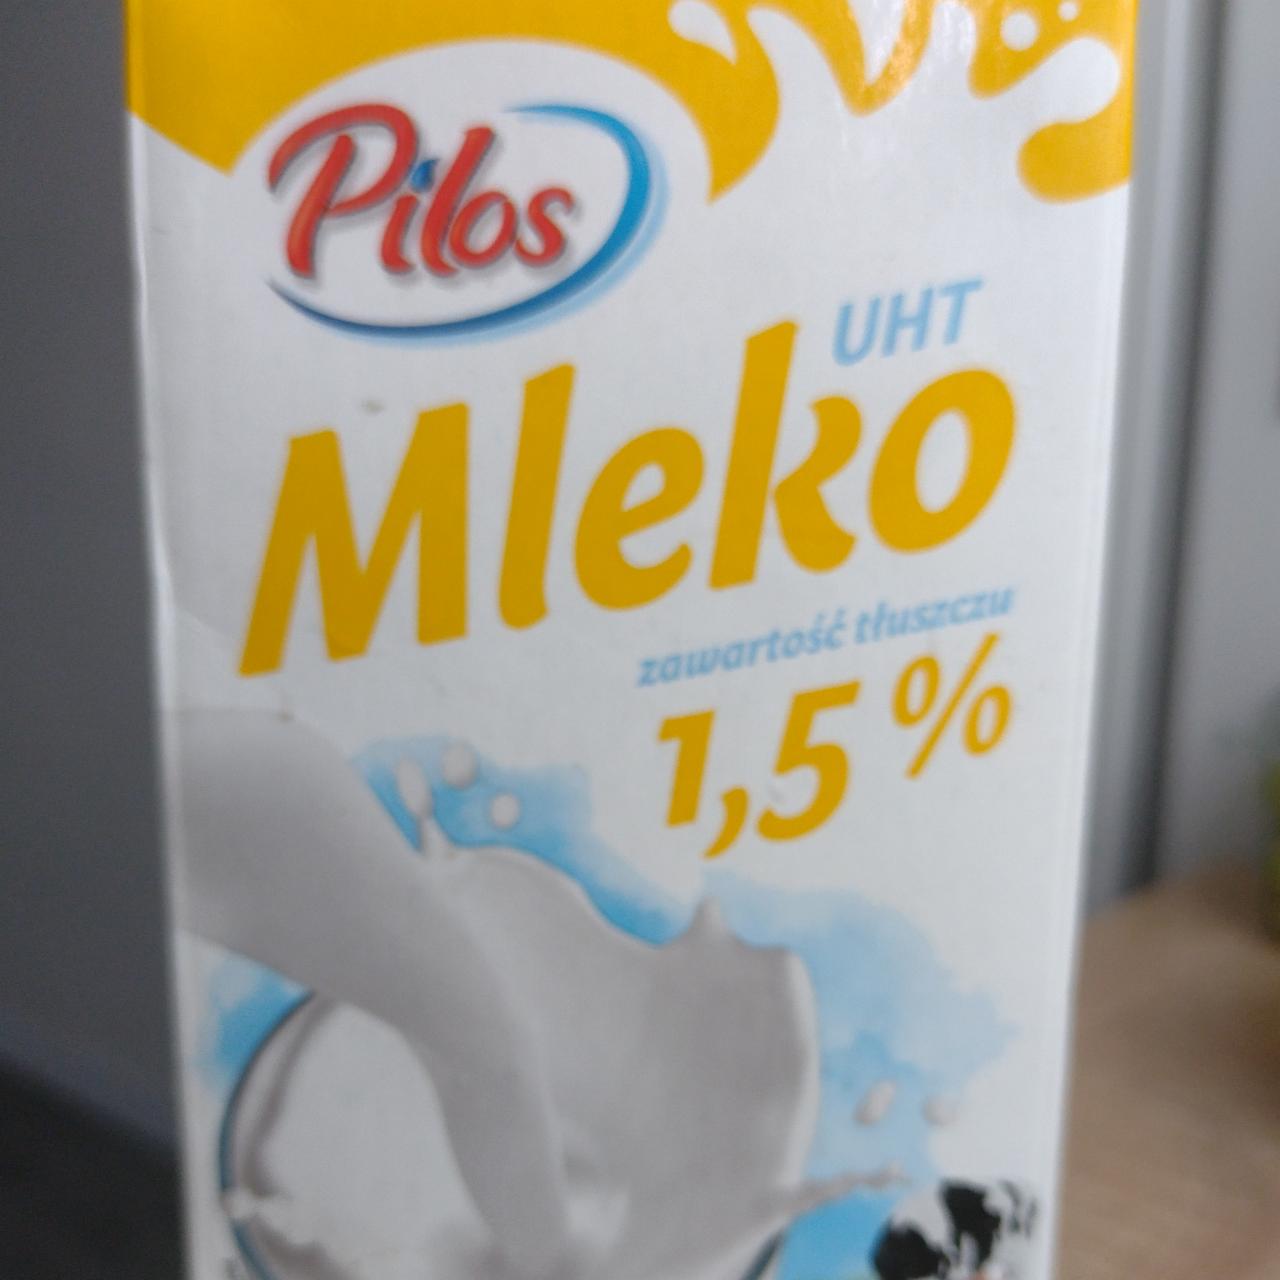 Zdjęcia - Mleko 1,5% Pilos